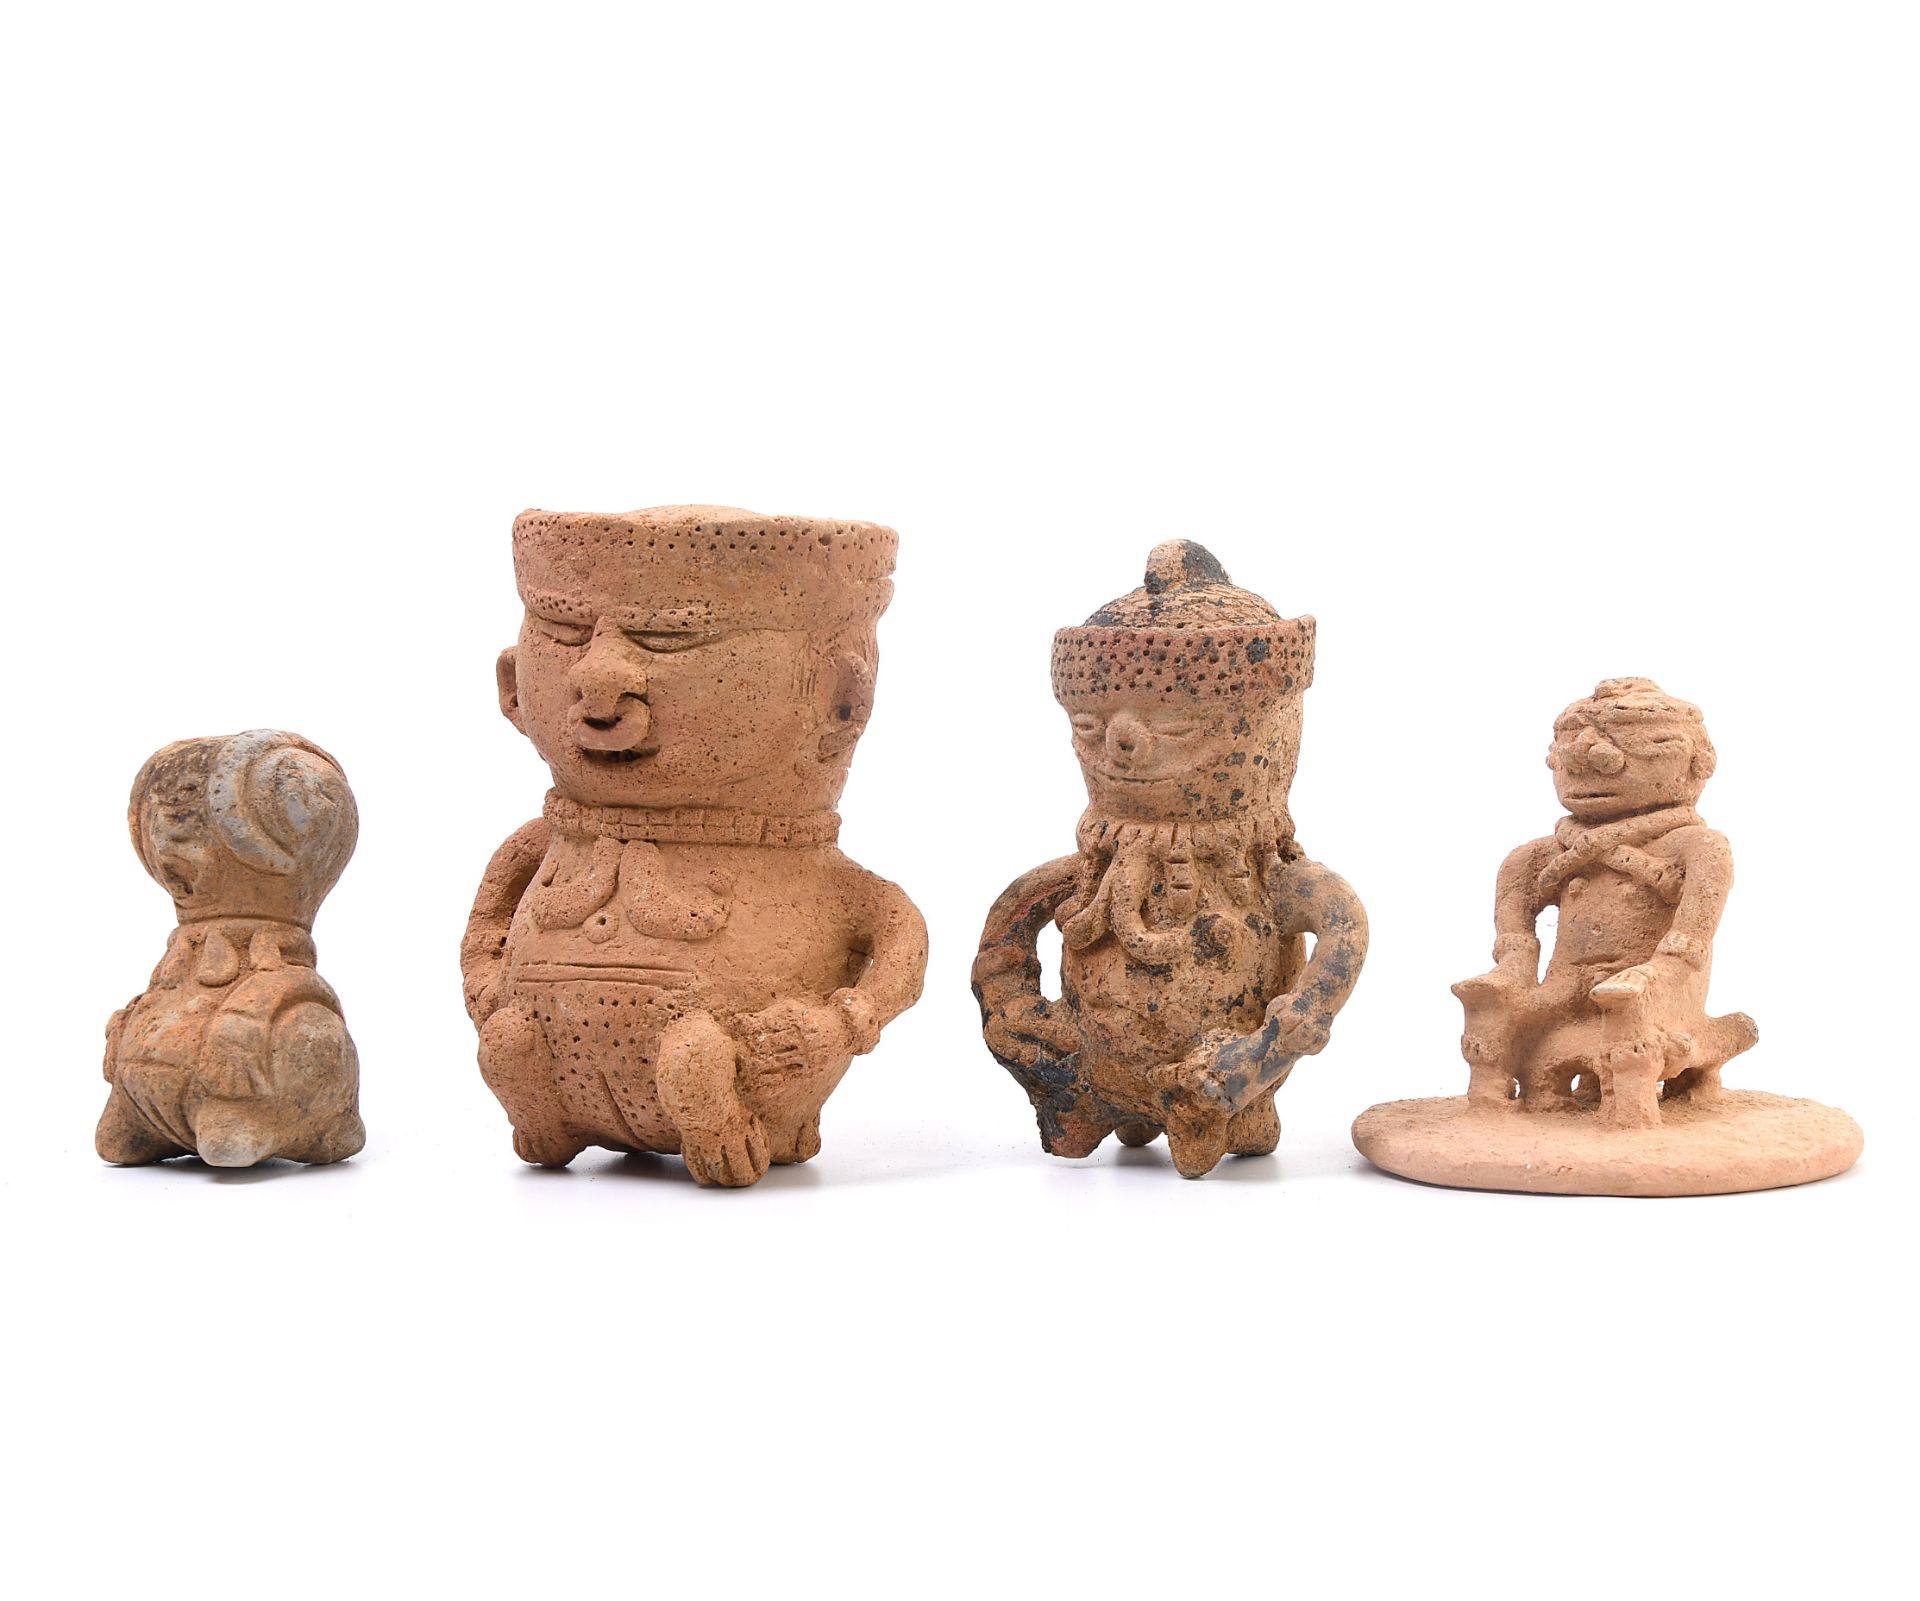 Colombia, Sinu region, four terracotta figures, ca. 1200-1400 AD.